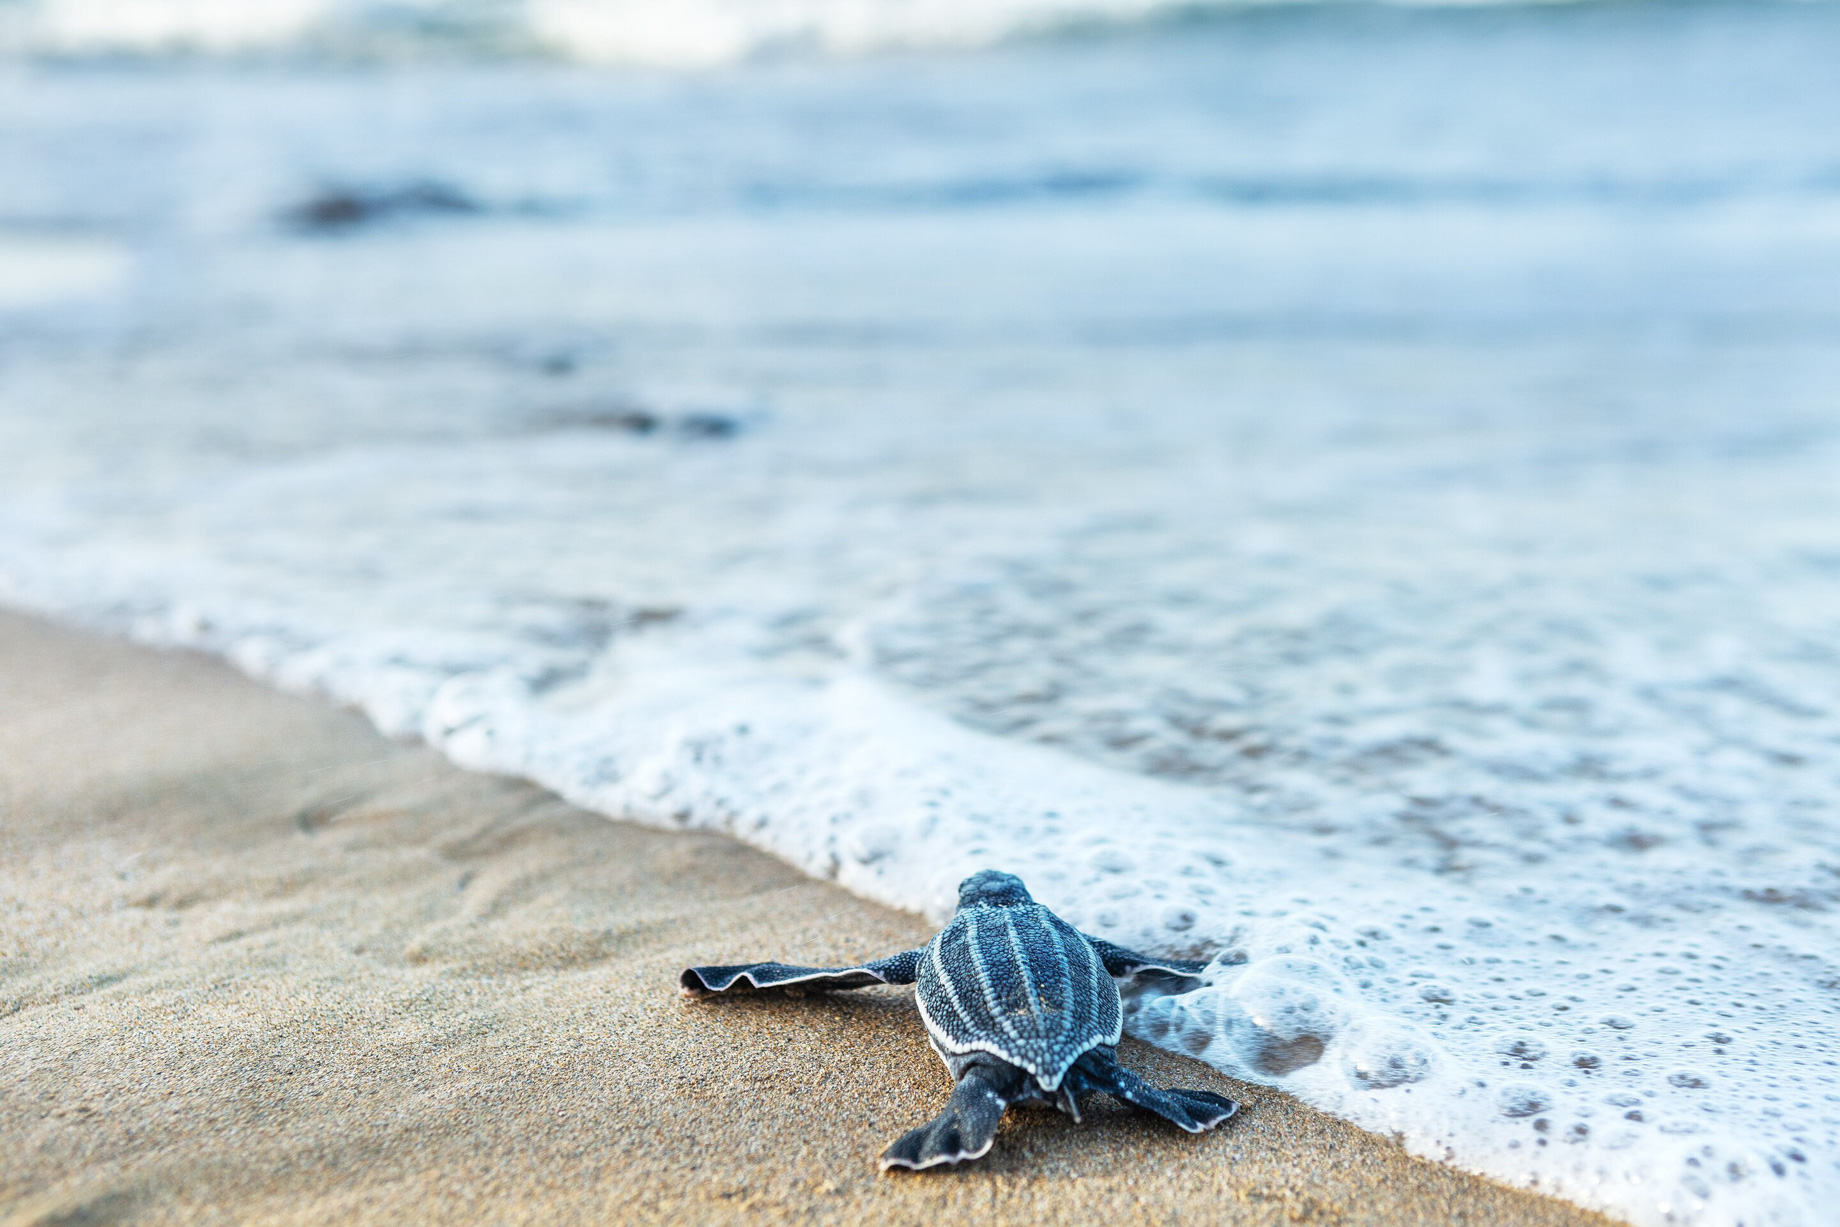 The St. Regis Bahia Beach Resort – Rio Grande, Puerto Rico – Sea Turtles Hatching